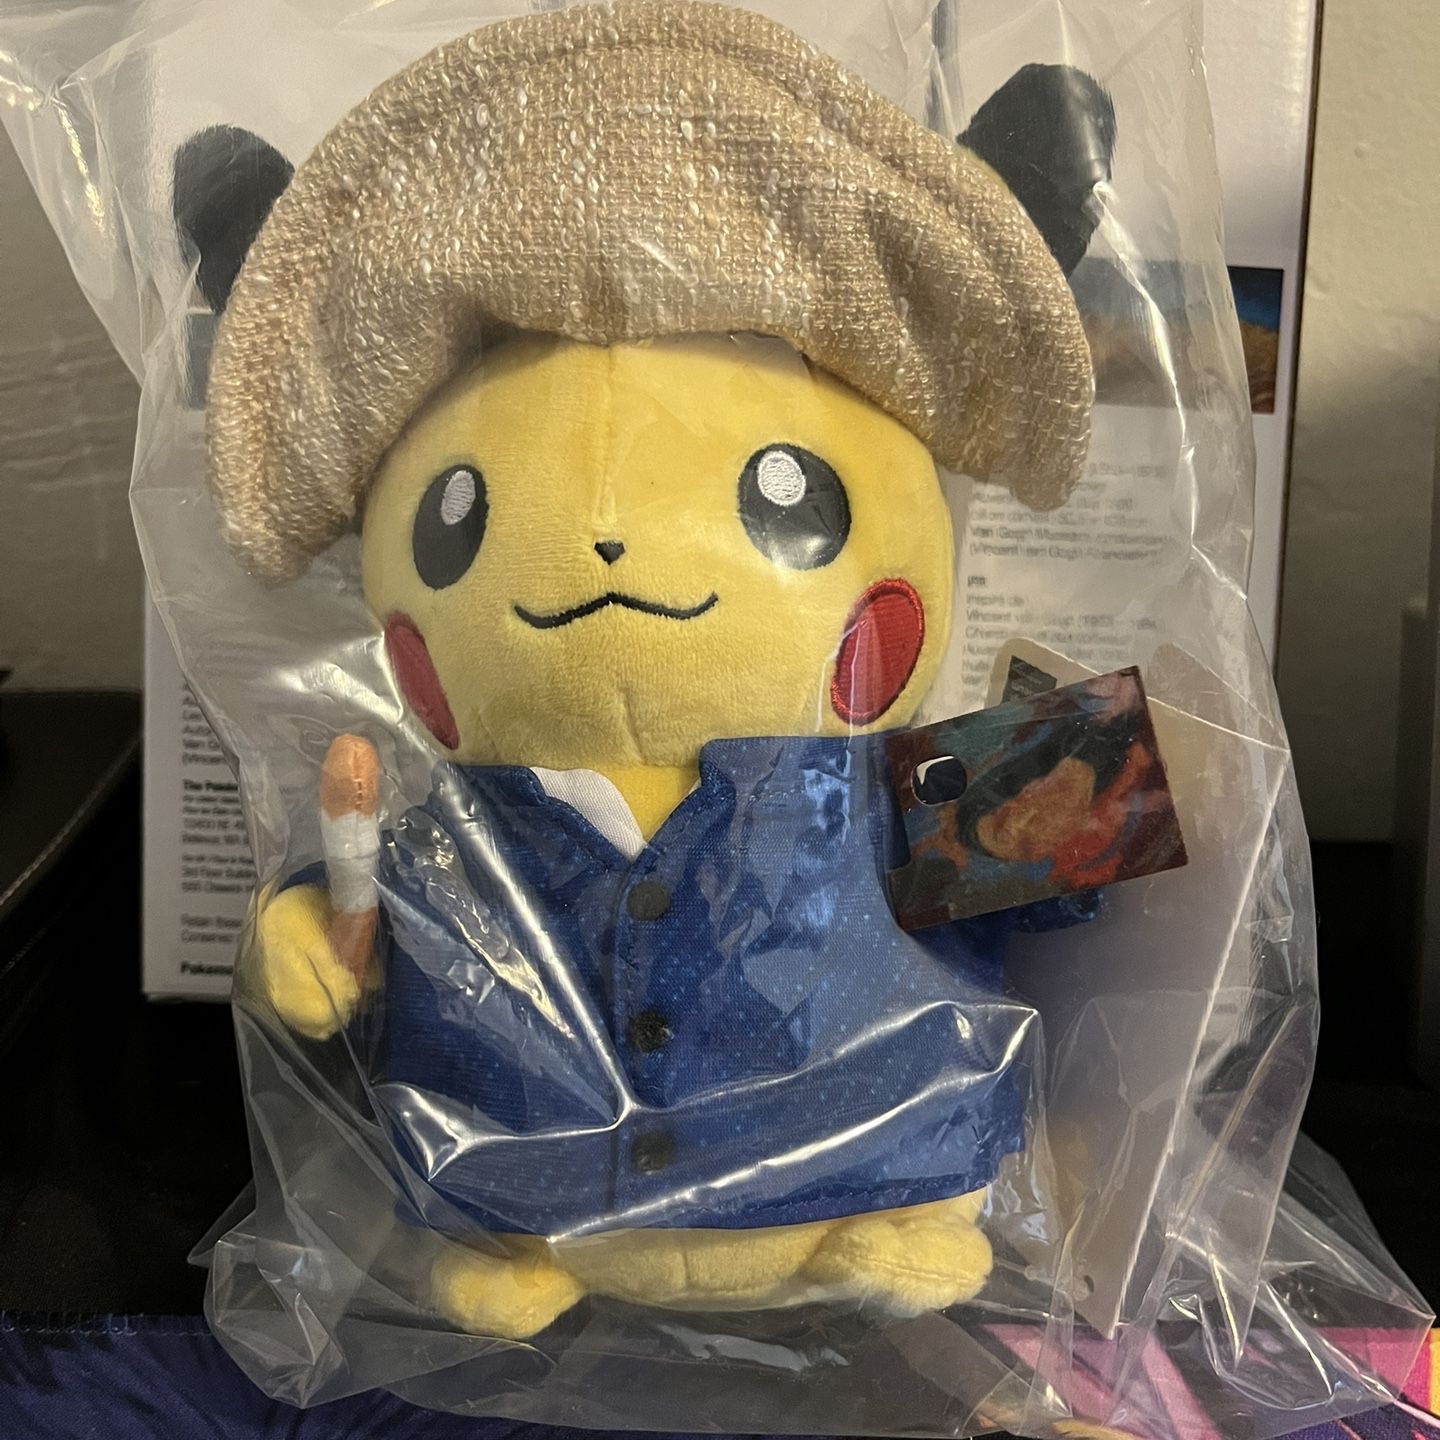 Exclusive Pokémon Center X Van Gogh Pikachu Plush